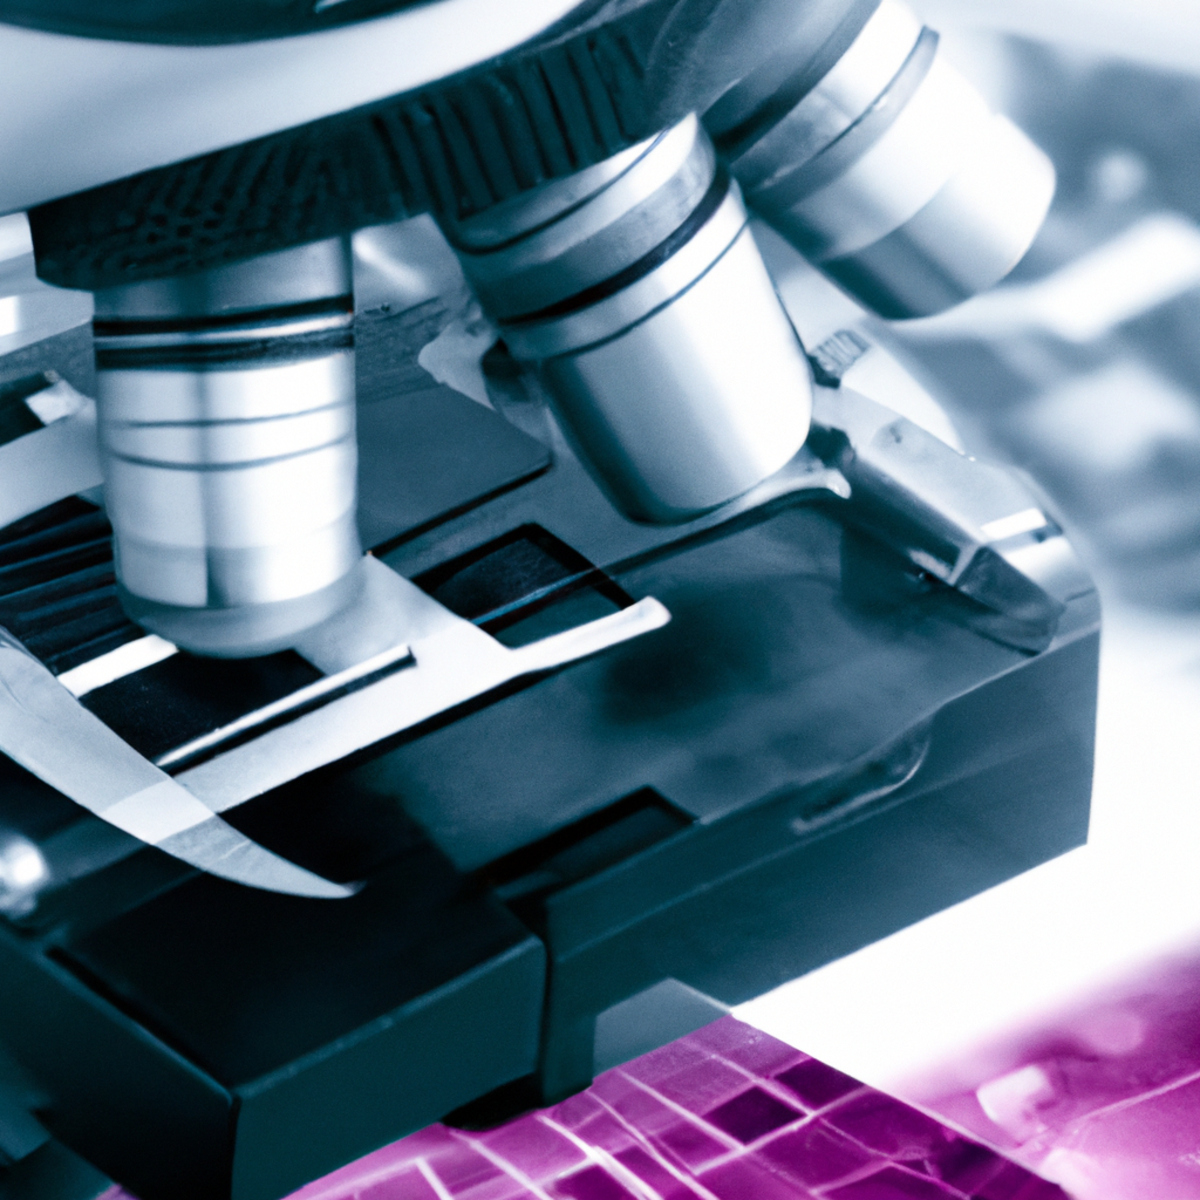 Cutting-edge lab with microscope, petri dish of vibrant cells, and data graphs symbolizing progress in Caroli Disease research.